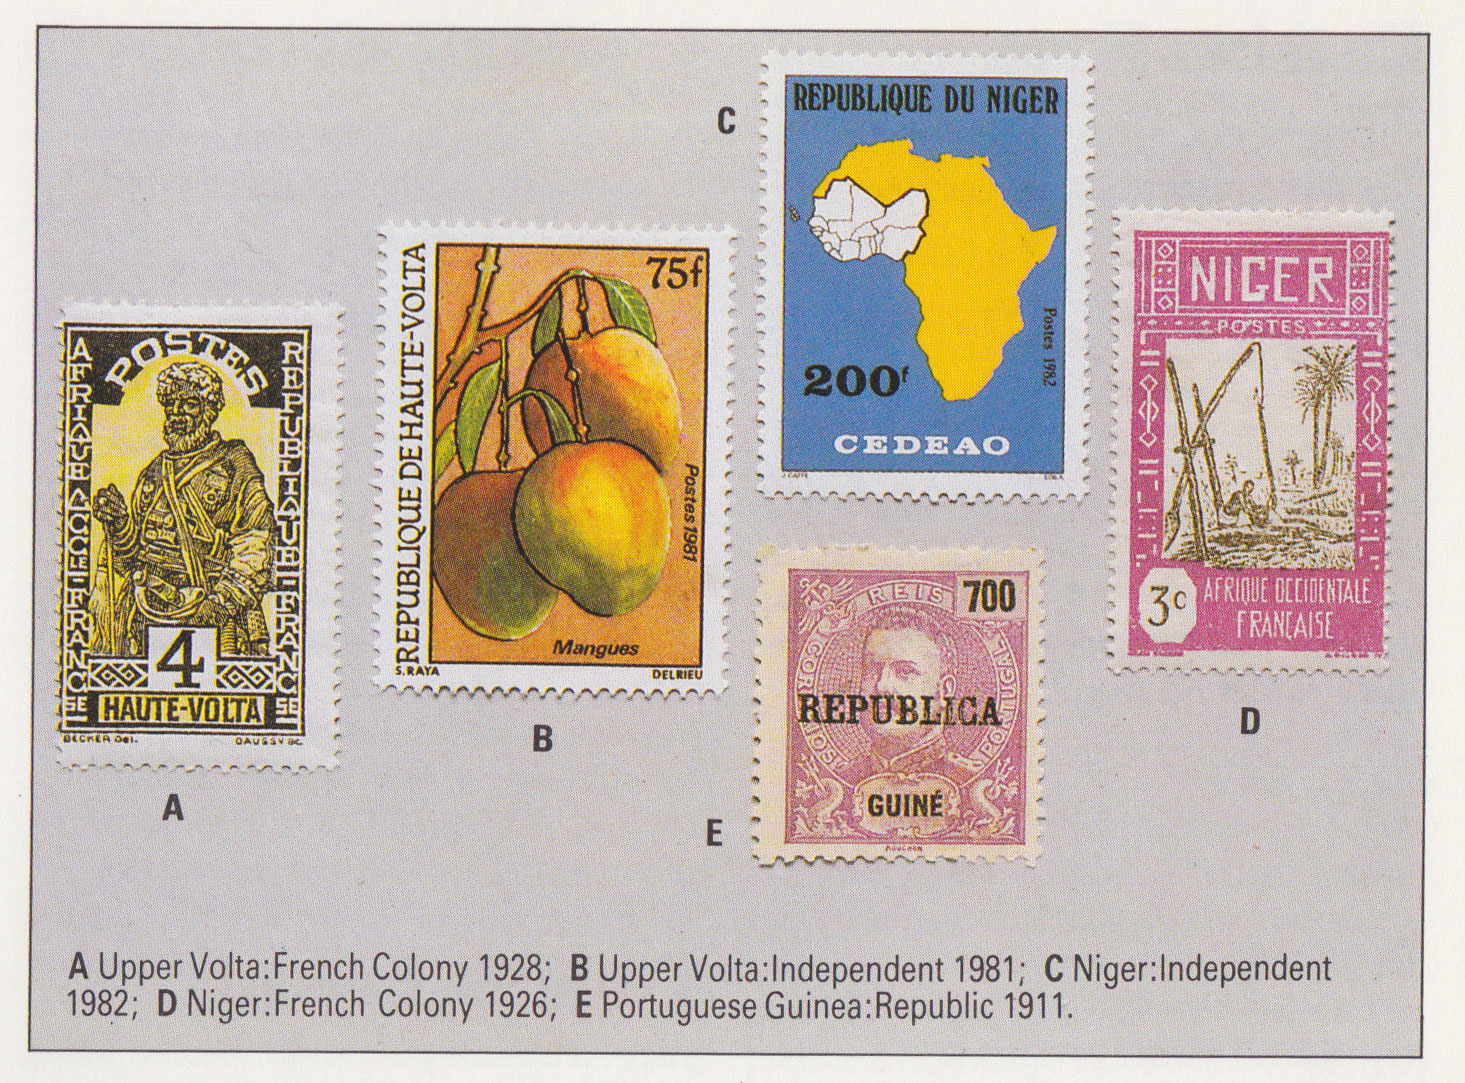 Upper Volta Niger stamps